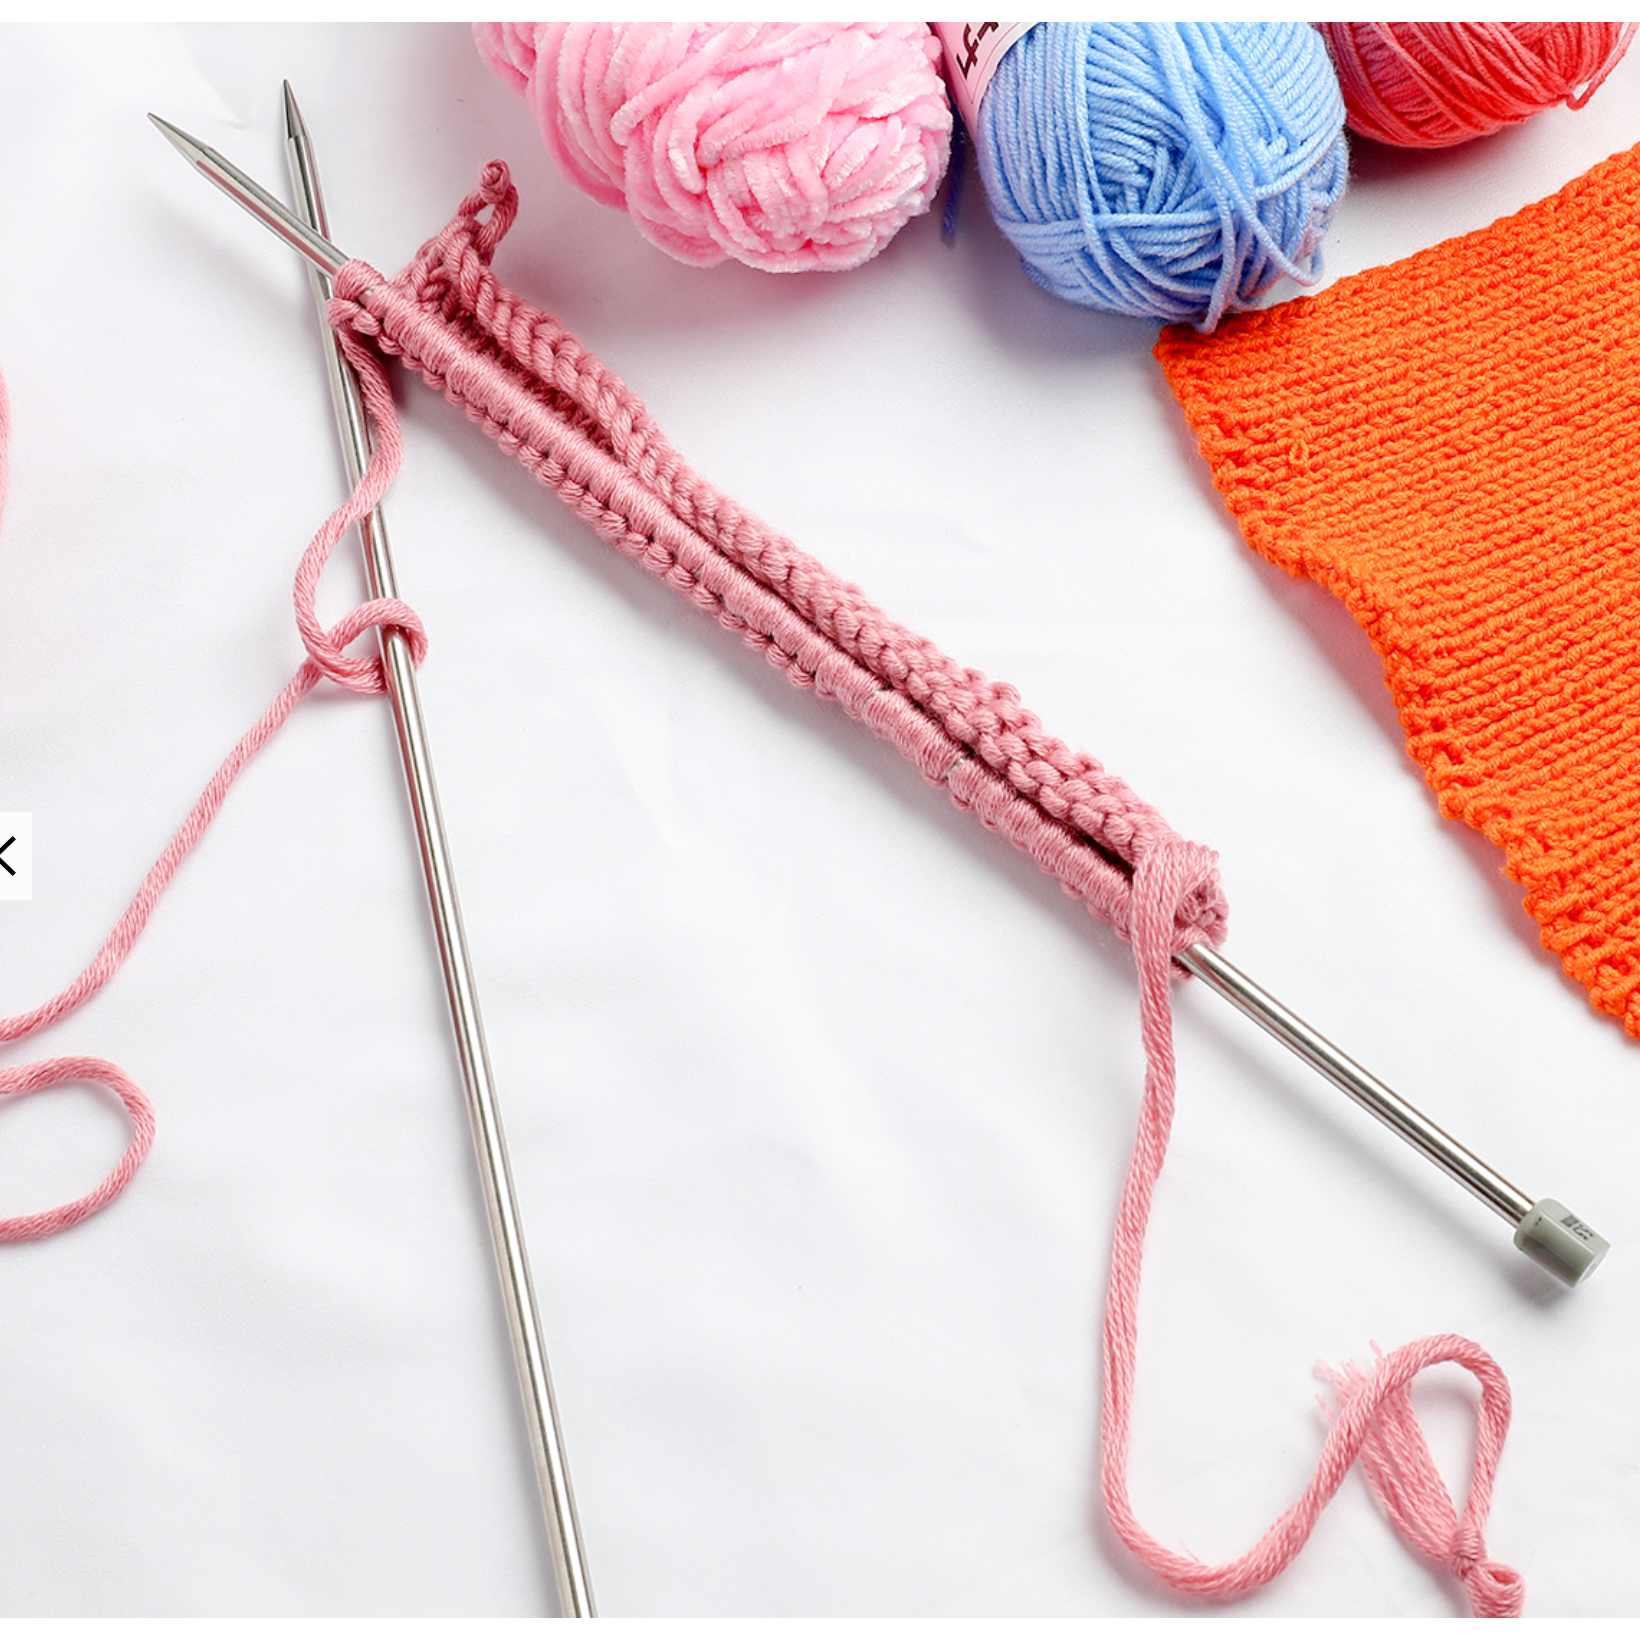 Athena YY Tunisian Crochet Hooks Set Afghan Crochet Hooks Aluminum Needles  Tools for Beginners+ Burable Cloth Case 11-Pack